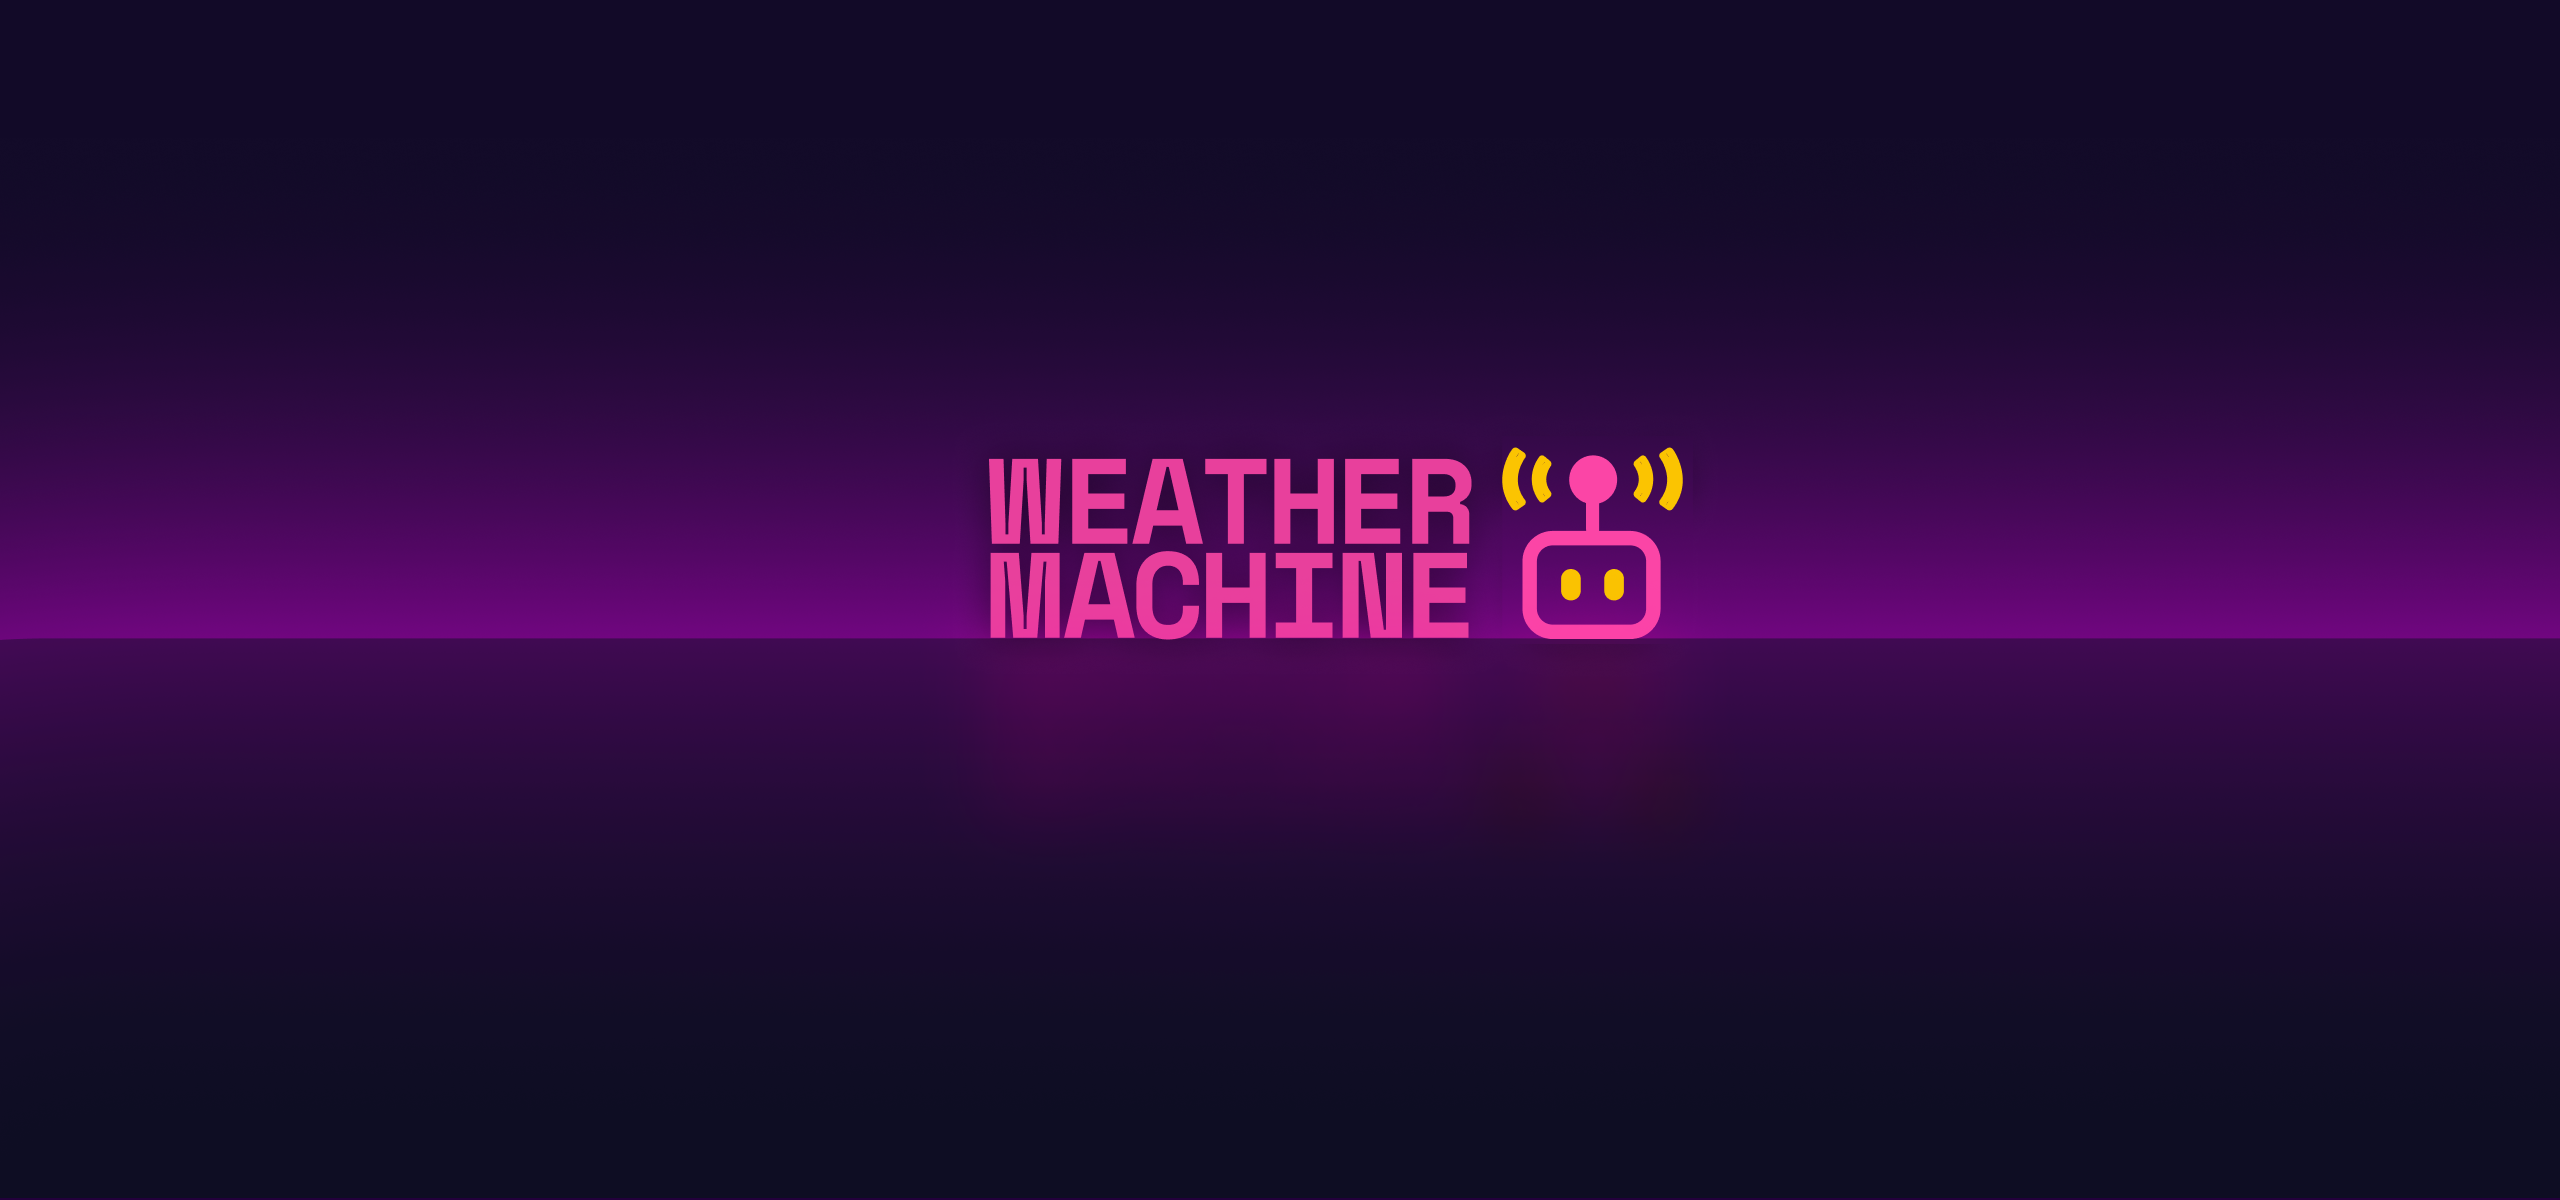 Weather Machine